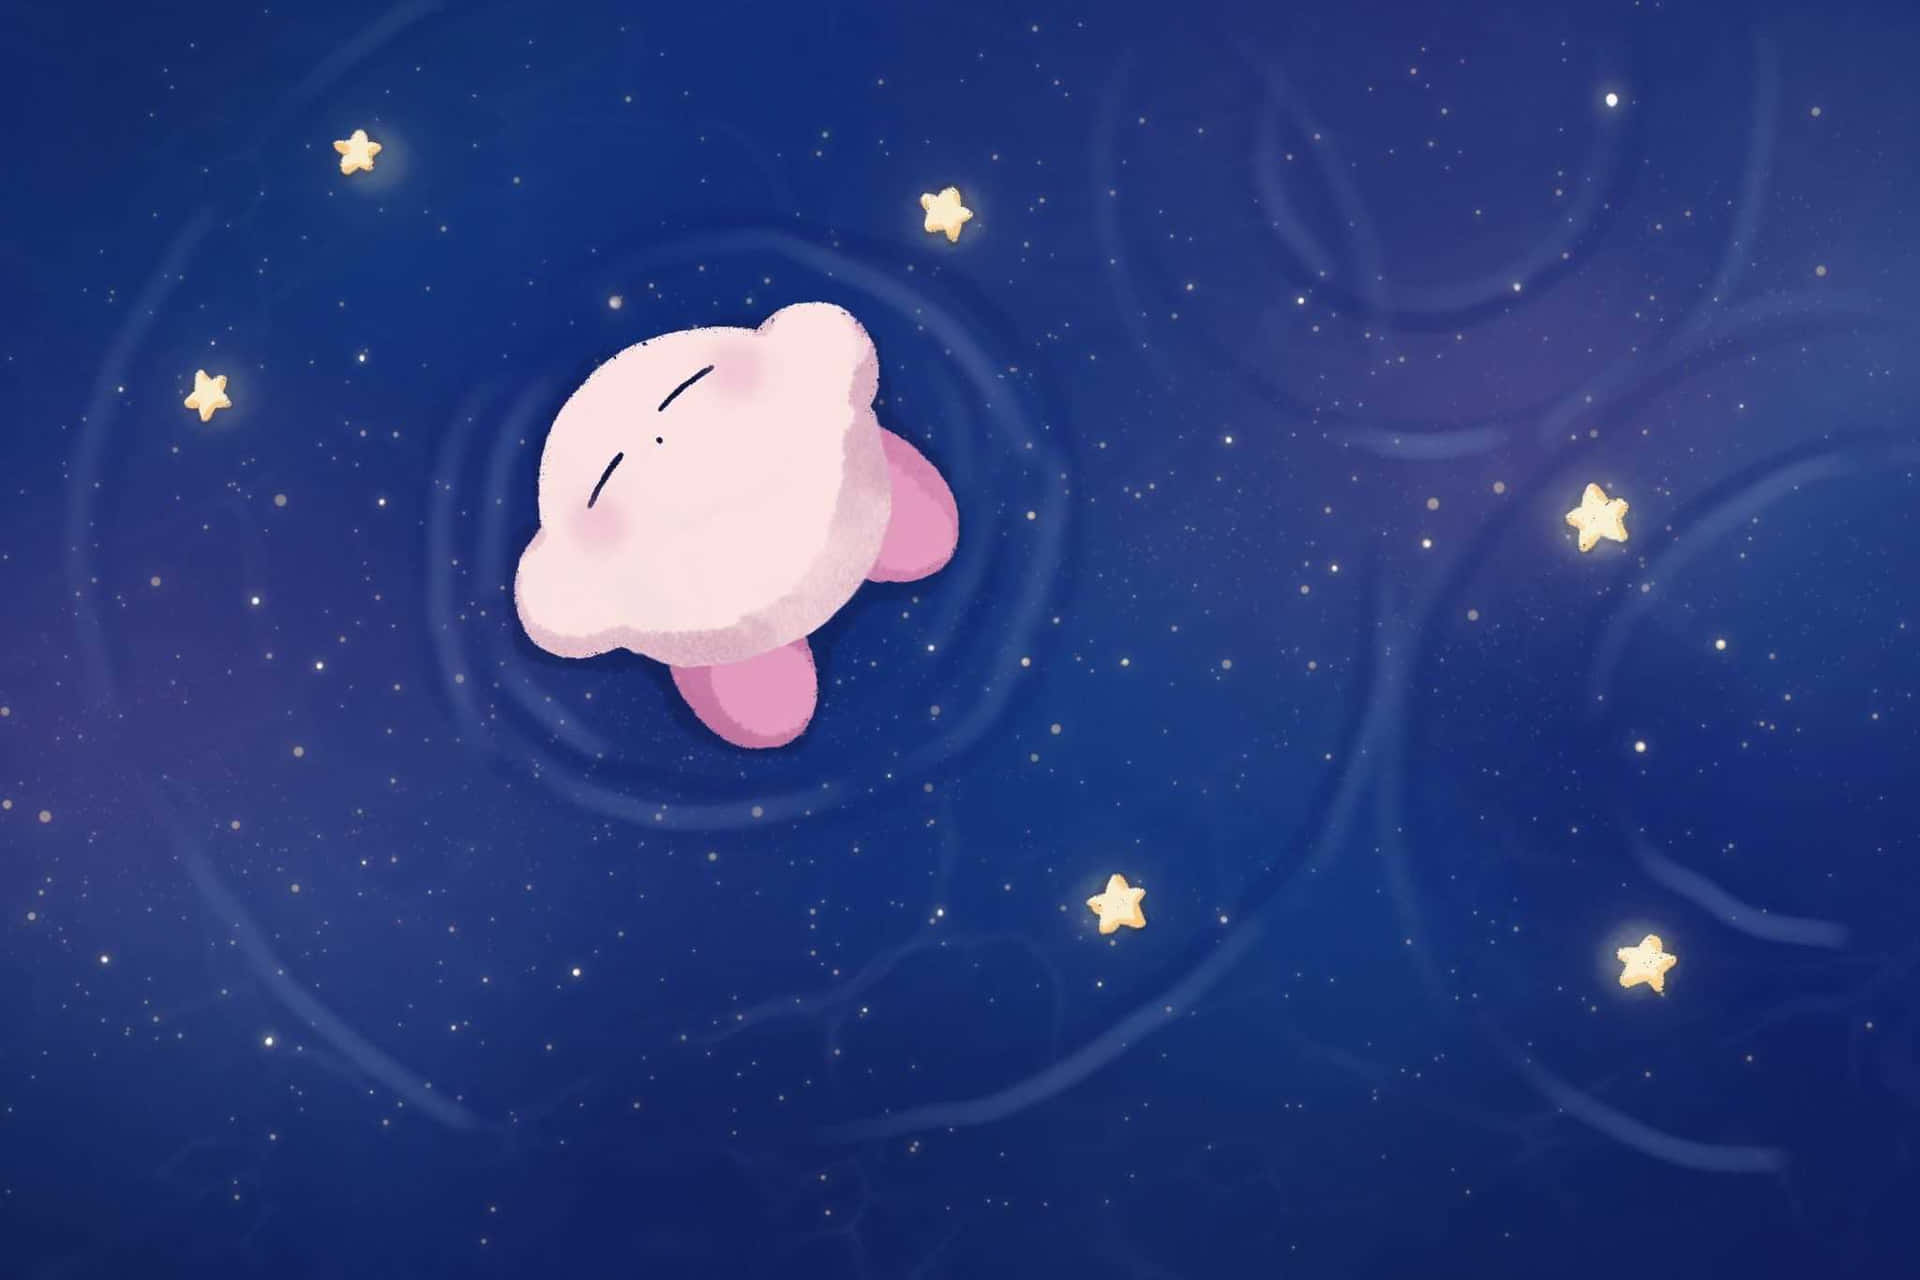 Dreamy Kirby Star Night.jpg Wallpaper